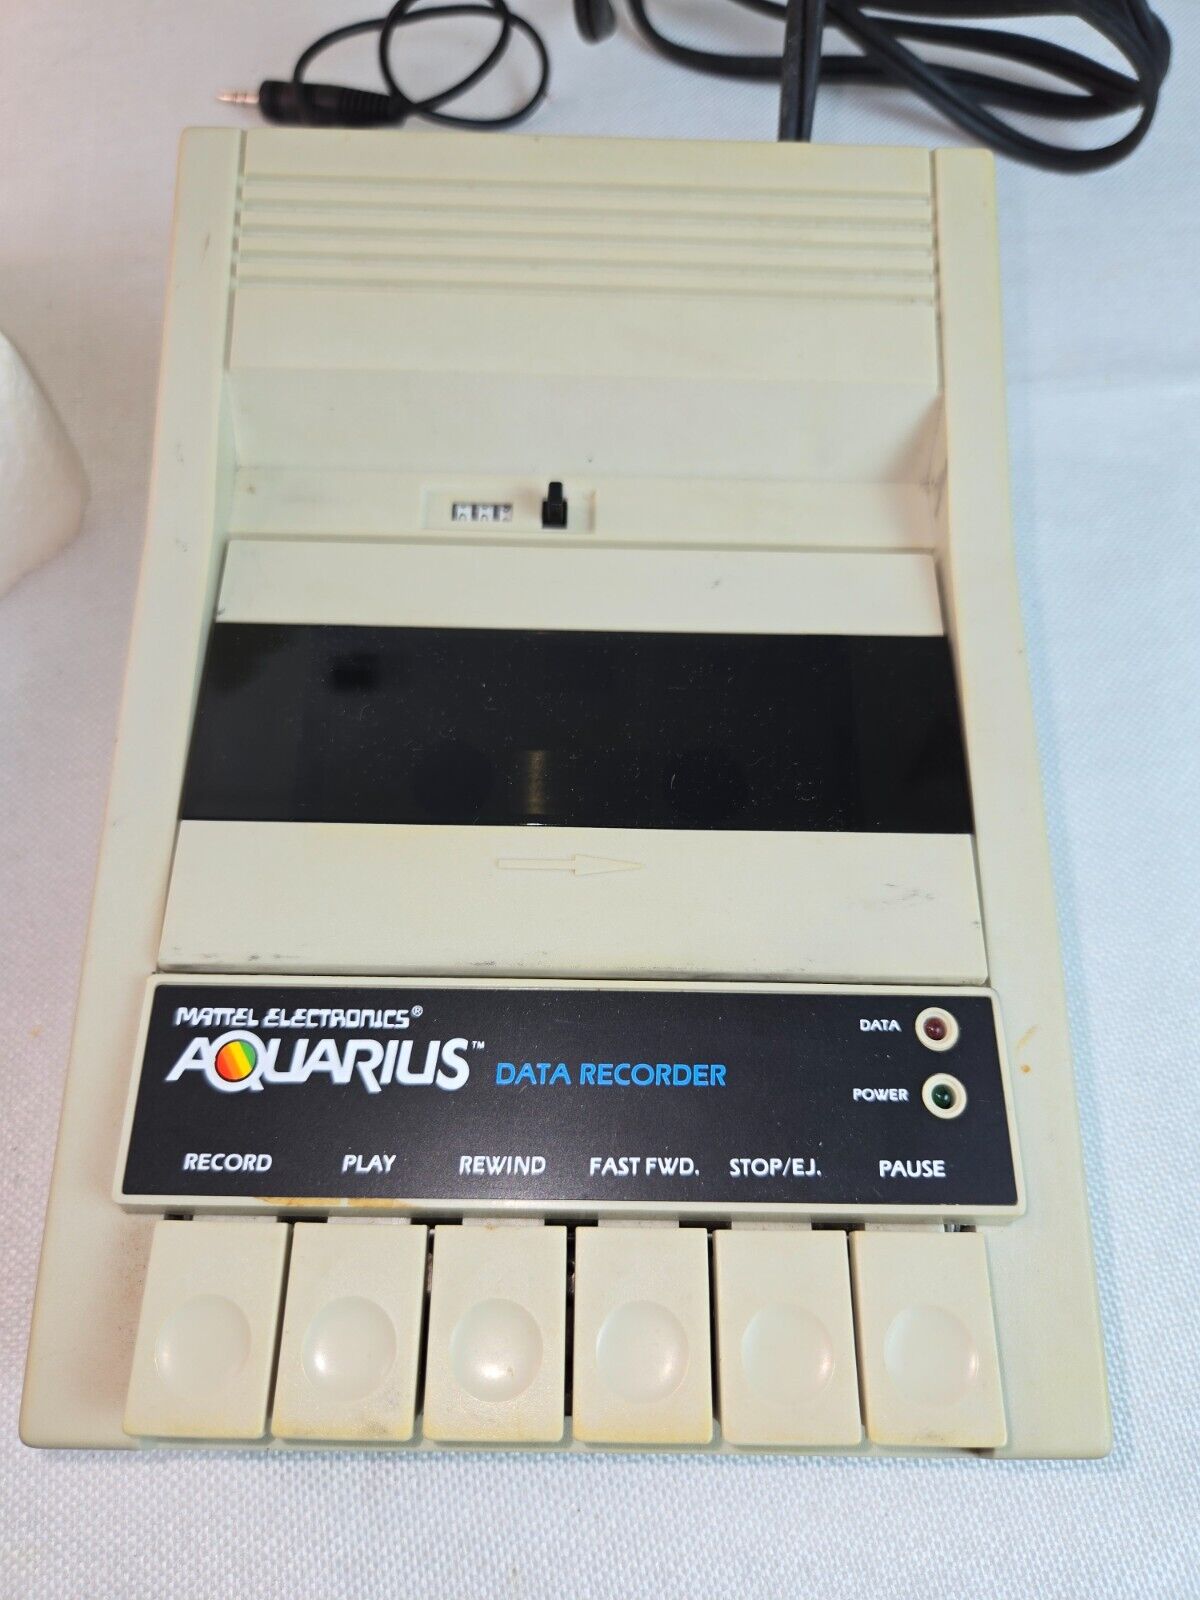 Mattel Electronics Aquarius Data Recorder Model 4394 in Original Box (Working)